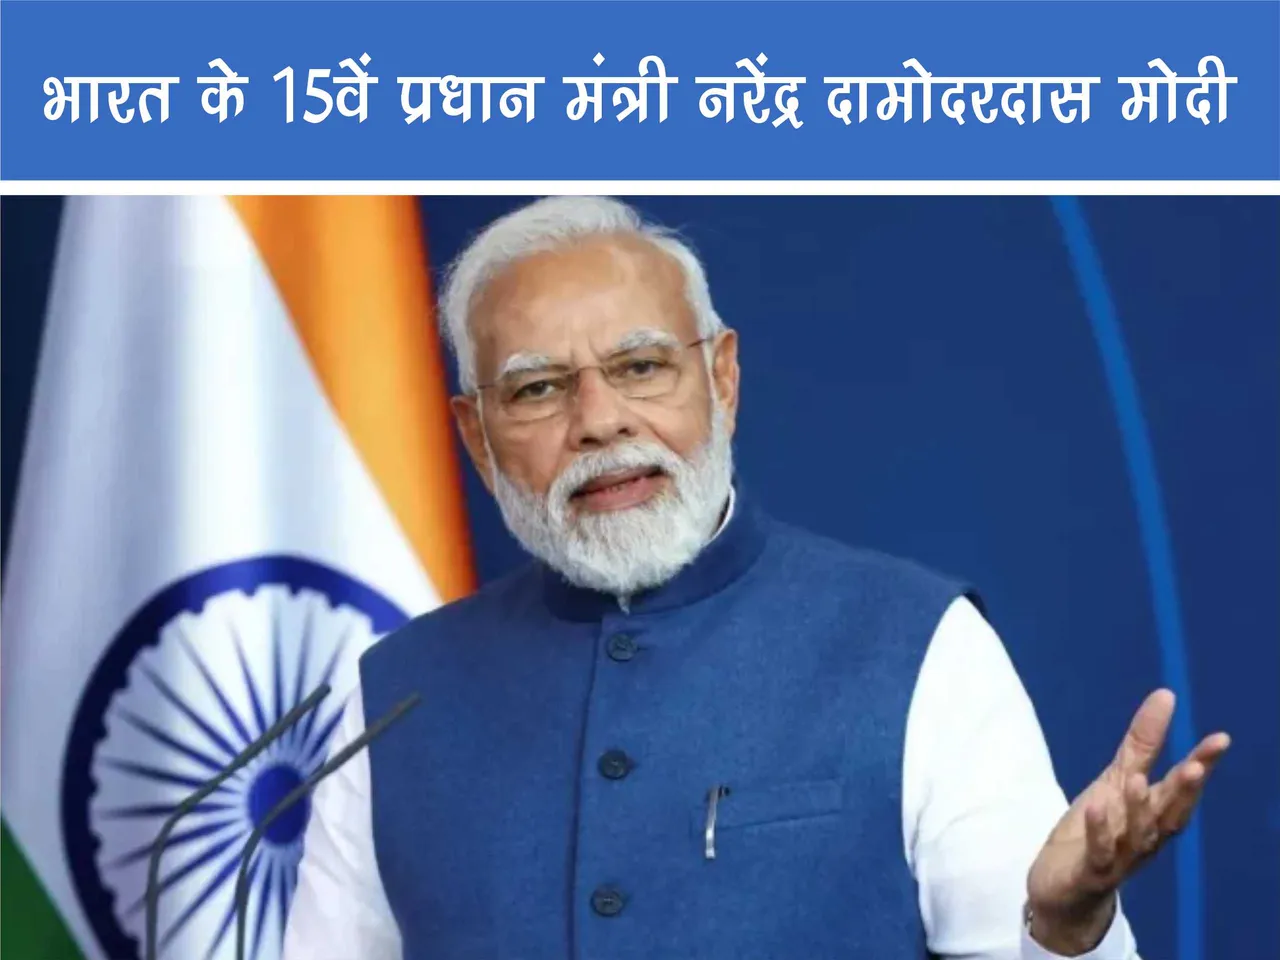 Prime Minister of India Narendra Modi giving speech